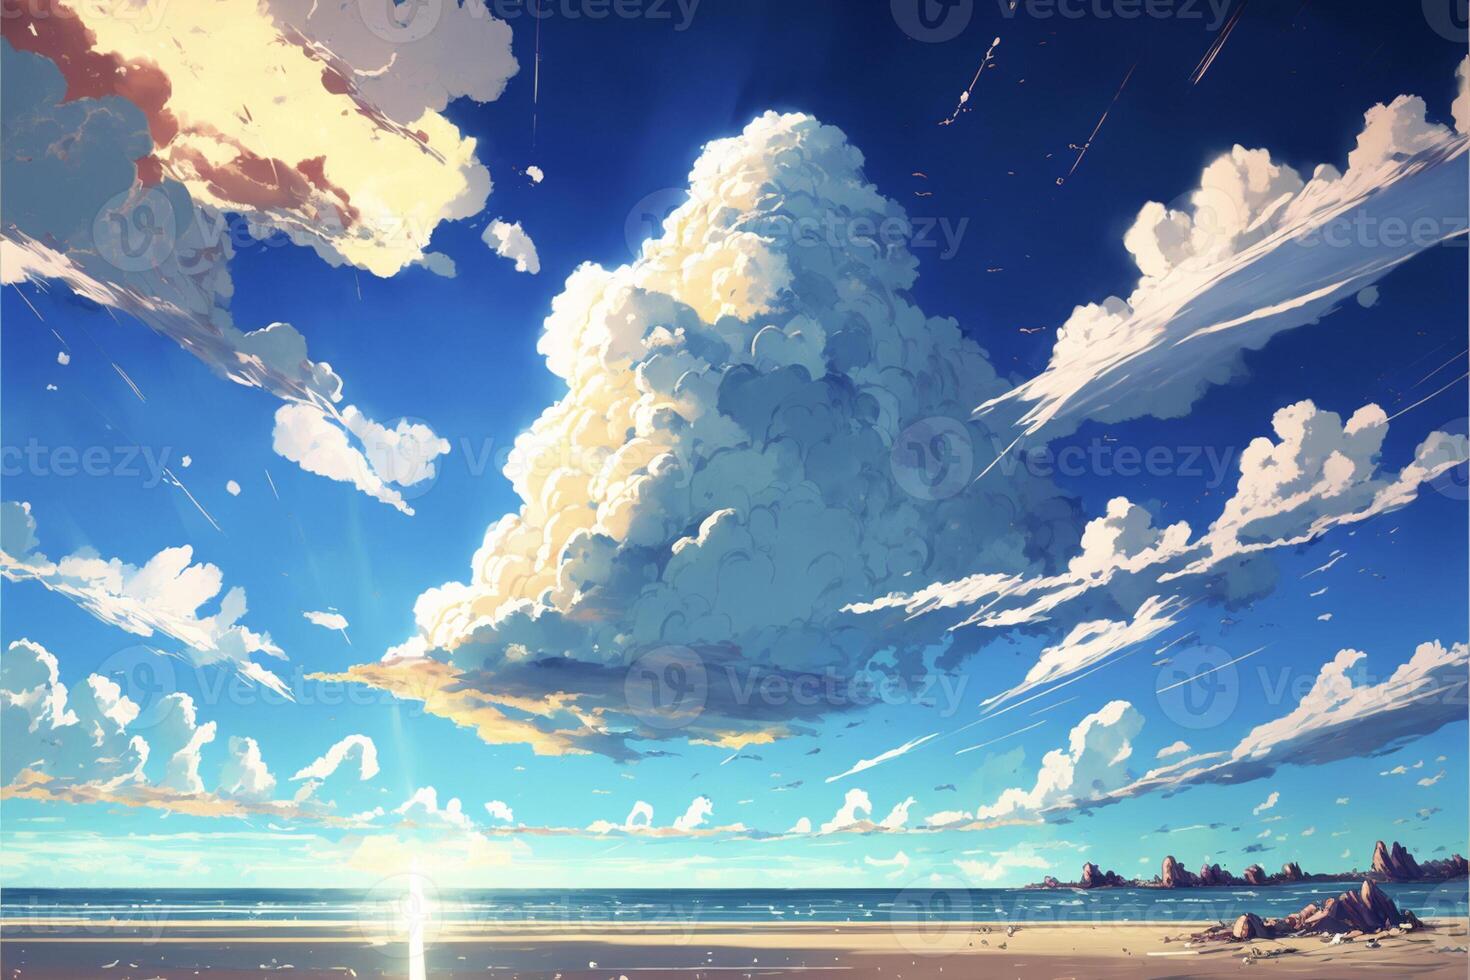 Anime Girl Watching an Island Over Cloud Digital Art Stock Illustration   Illustration of painting cartoon 277641459